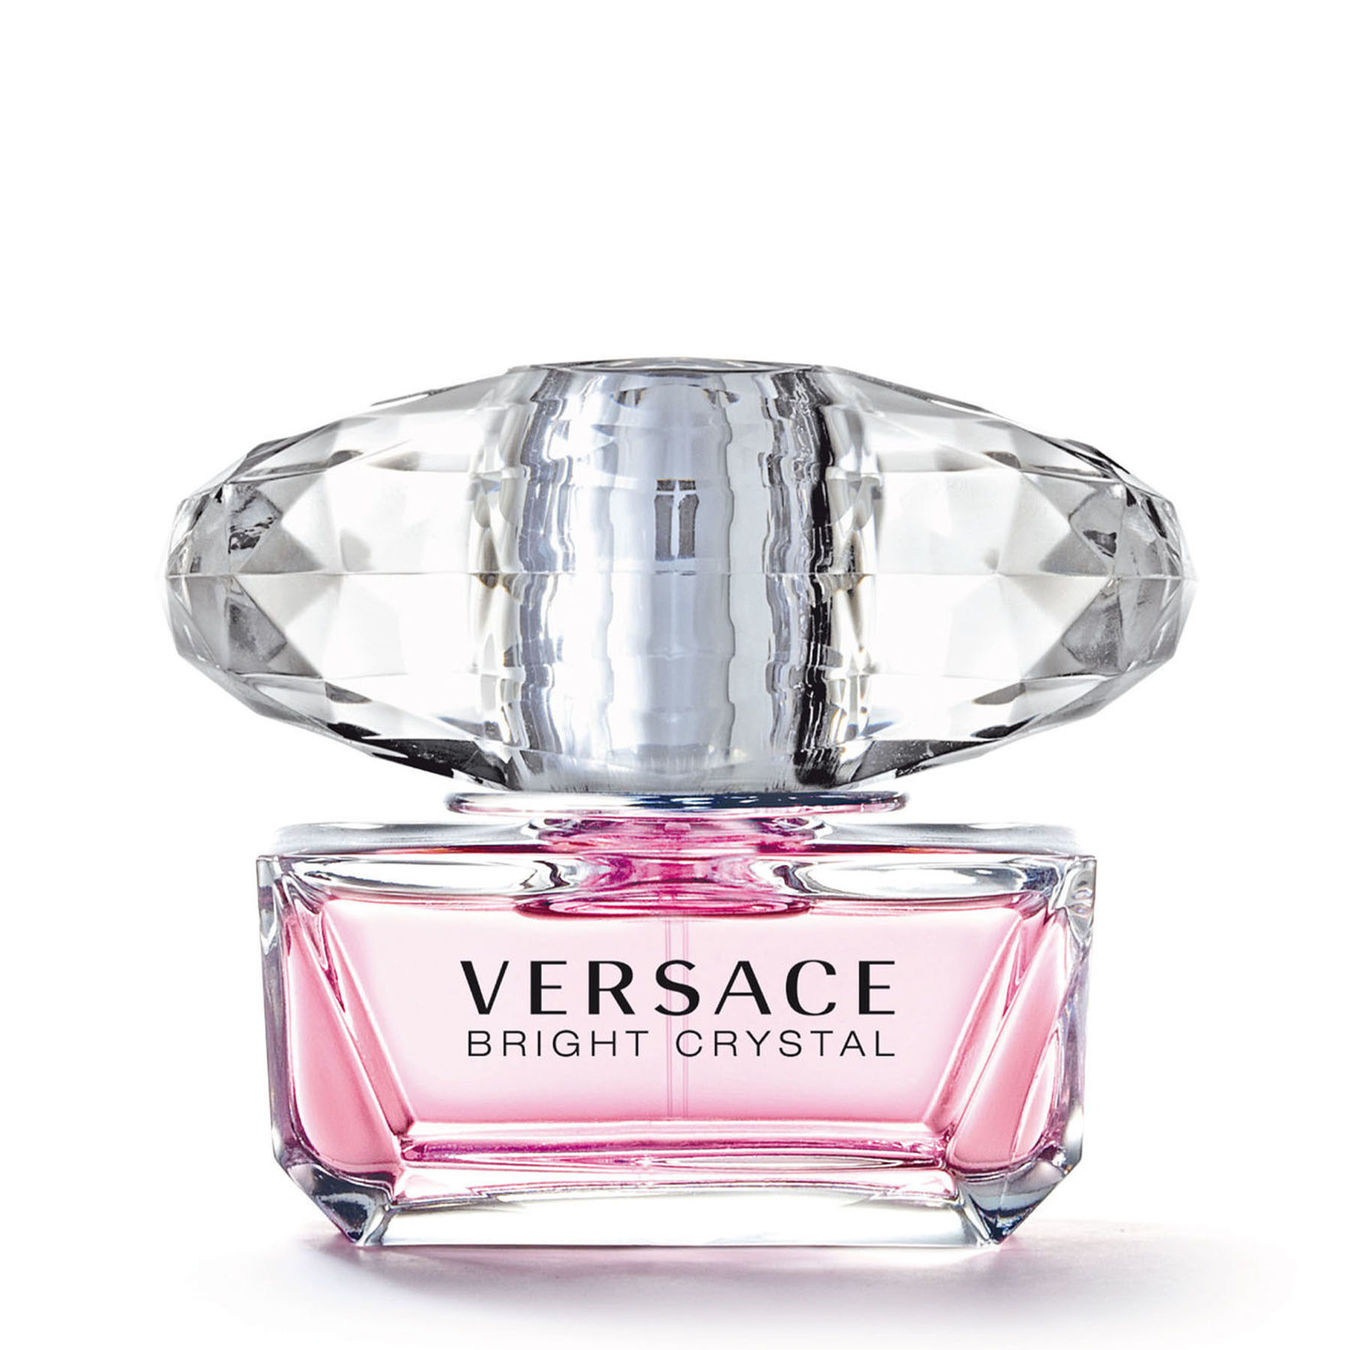 Versace Bright Crystal Eau de Toilette 50ml Damen von Versace